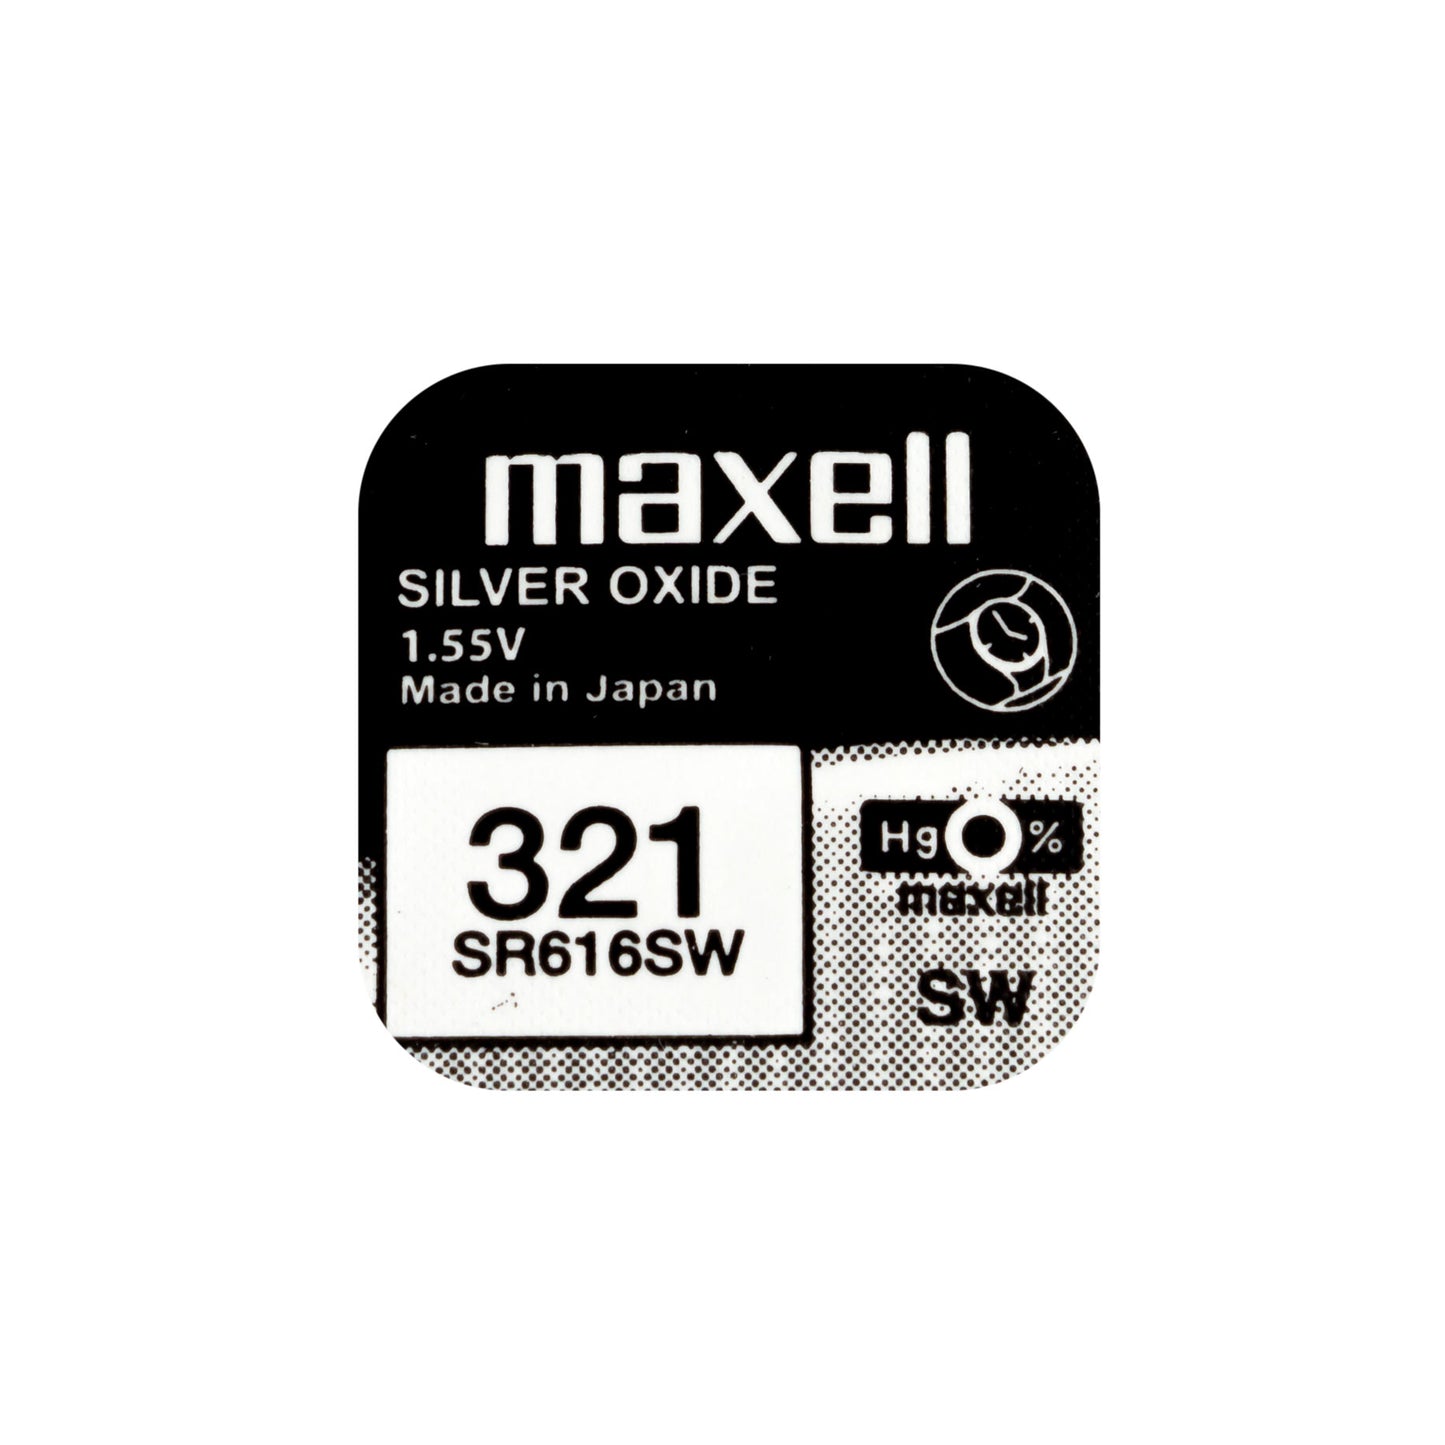 Maxell SR616SW (321) Silver Oxide Watch Batteries